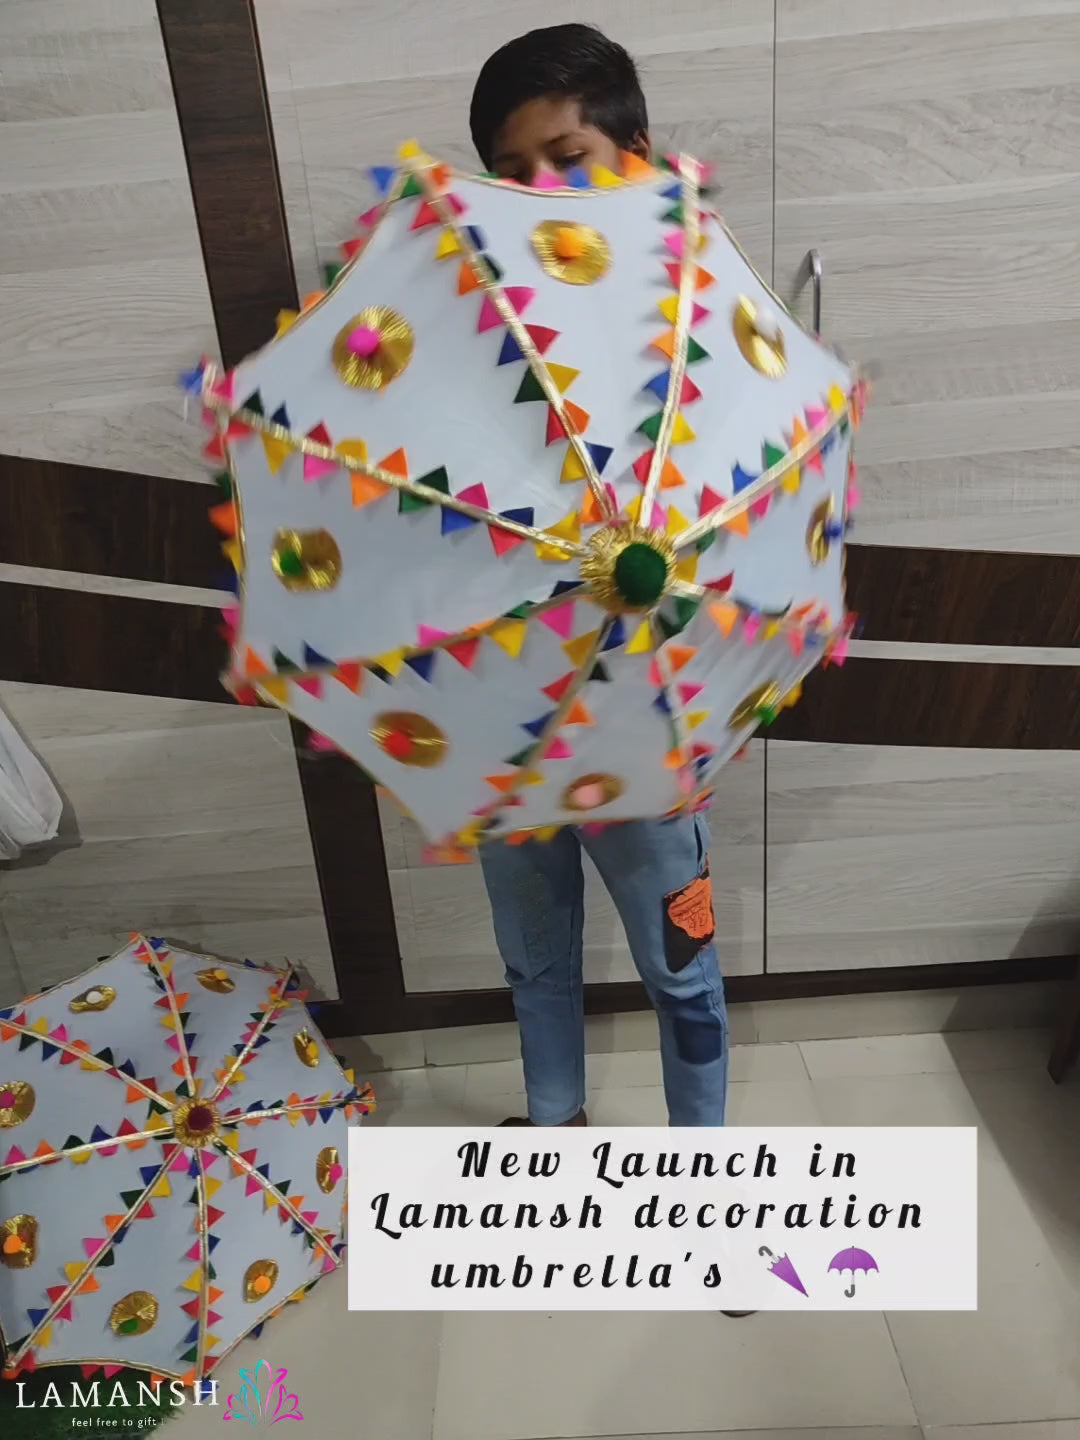 LAMANSH® Indian Wedding decoration Umbrellas / Fabric Decorated Backdrop Umbrella's for Haldi & Mehendi ceremony